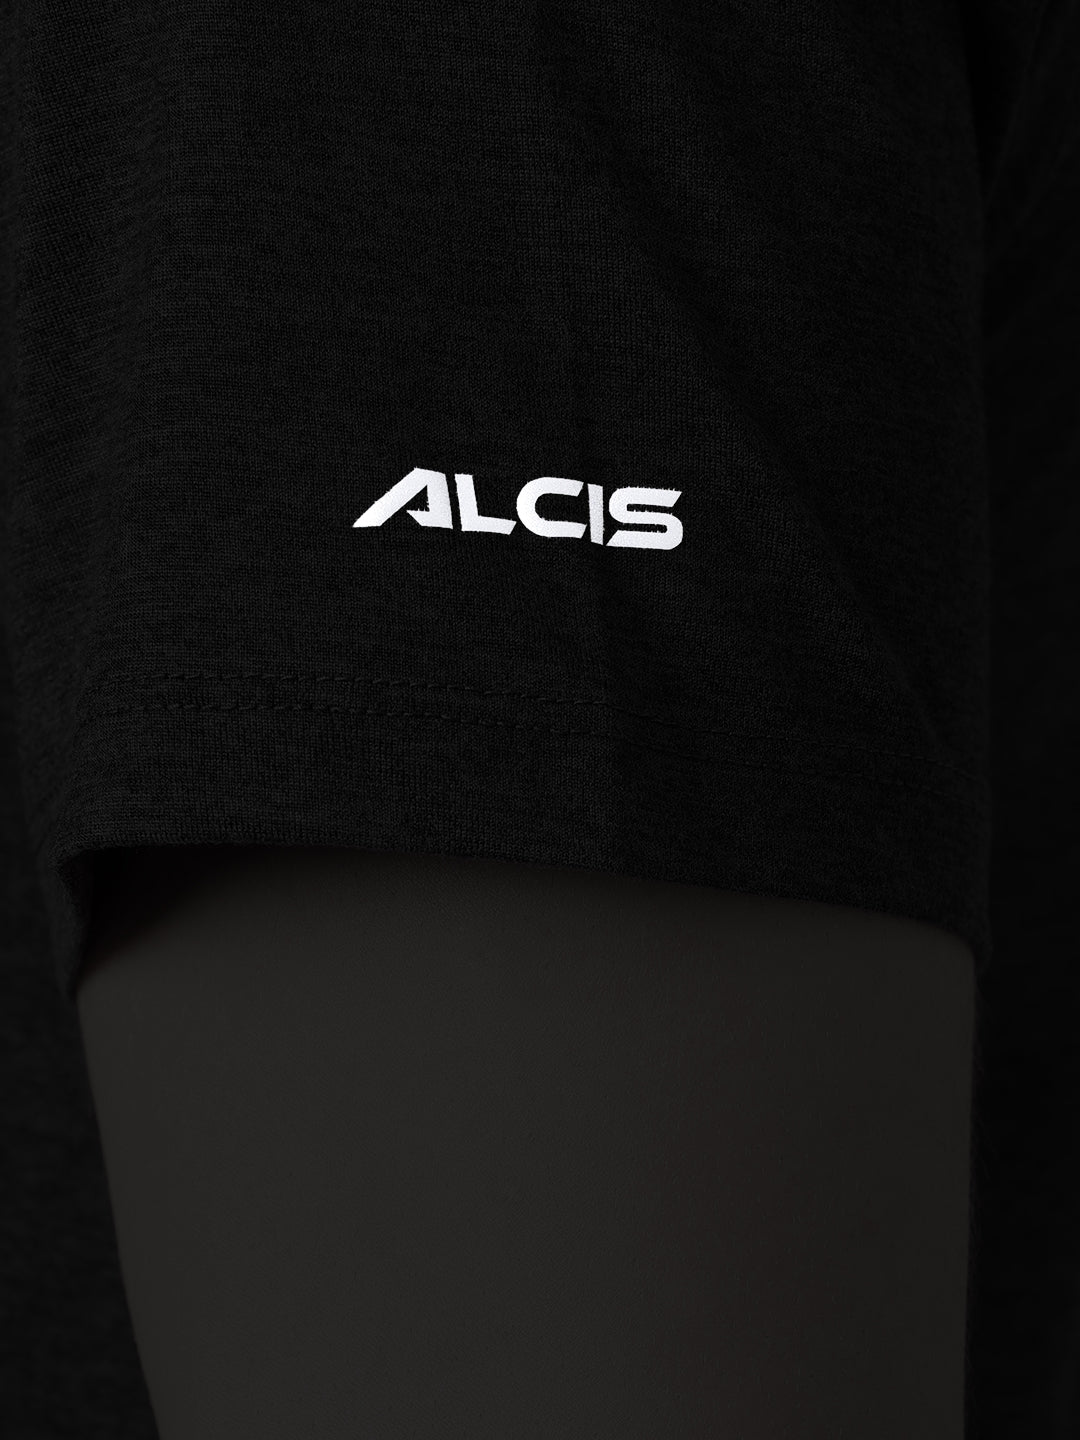 Alcis Men's Grey & Black Anti-Static Drytech+ Slim-Fit Training Tee